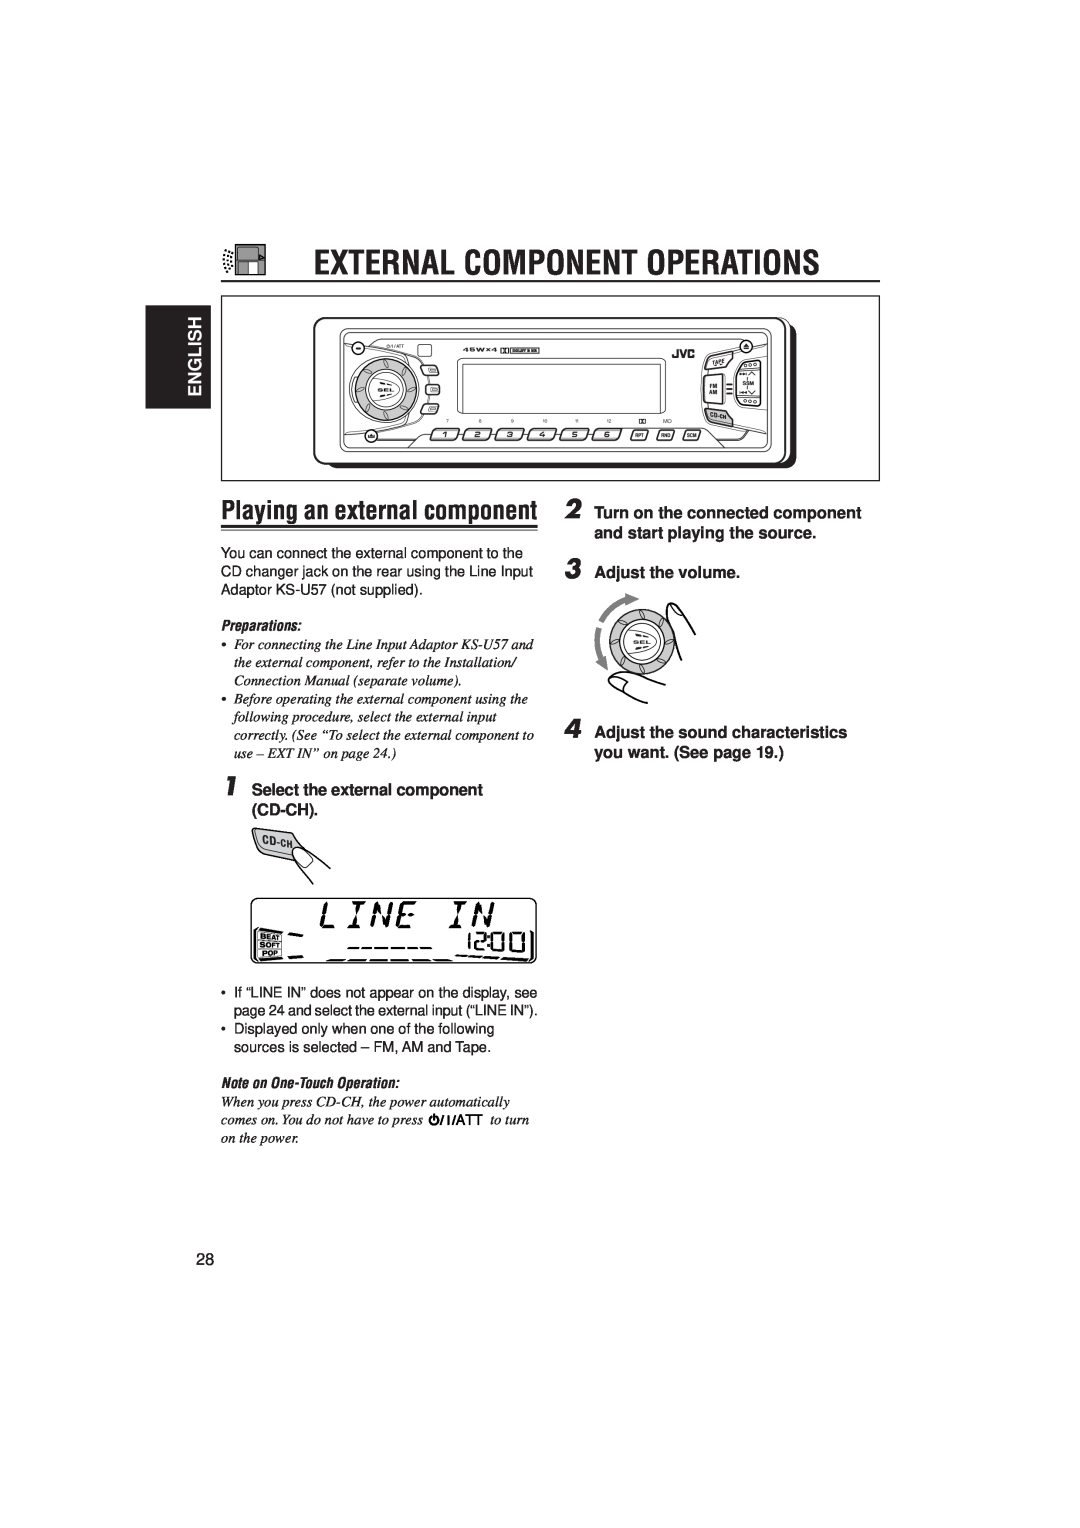 JVC KS-FX815 External Component Operations, Playing an external component, Select the external component CD-CH, English 